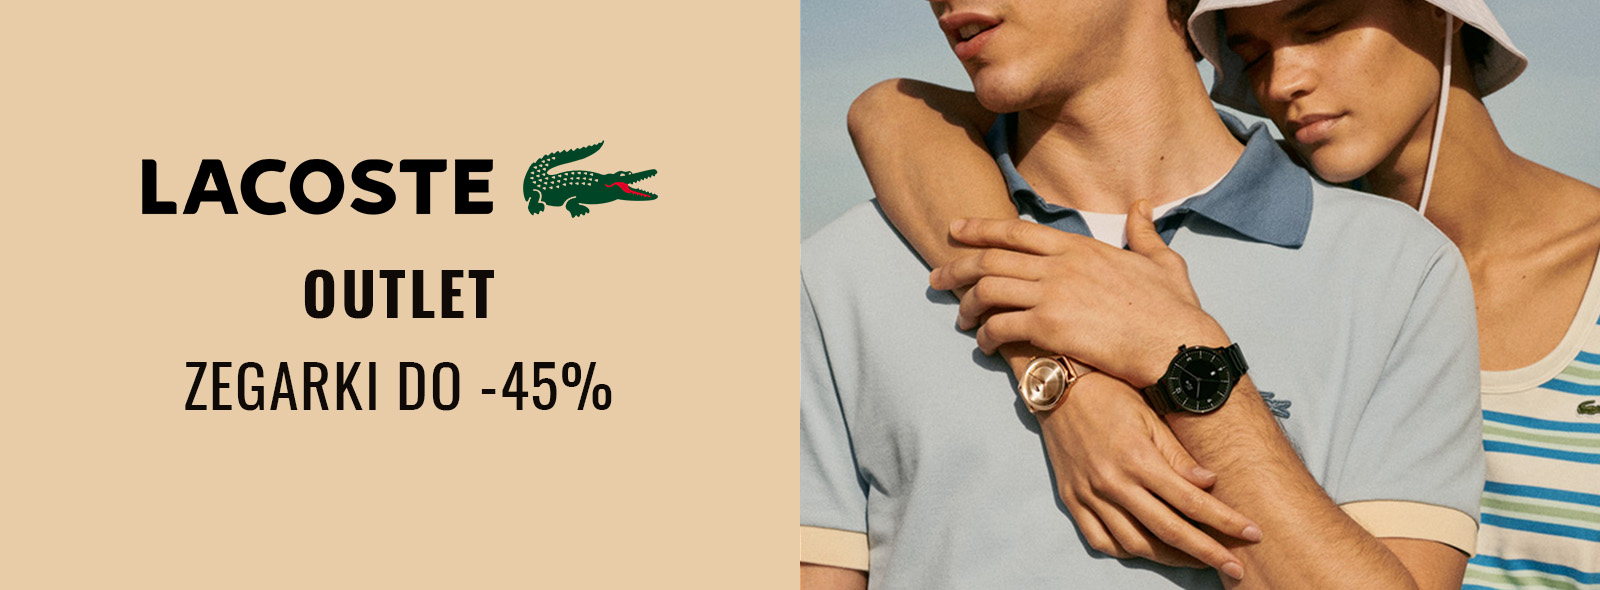 Promocja na zegarki Lacoste - rabaty nawet do 45%! | Zegarownia.pl Blog